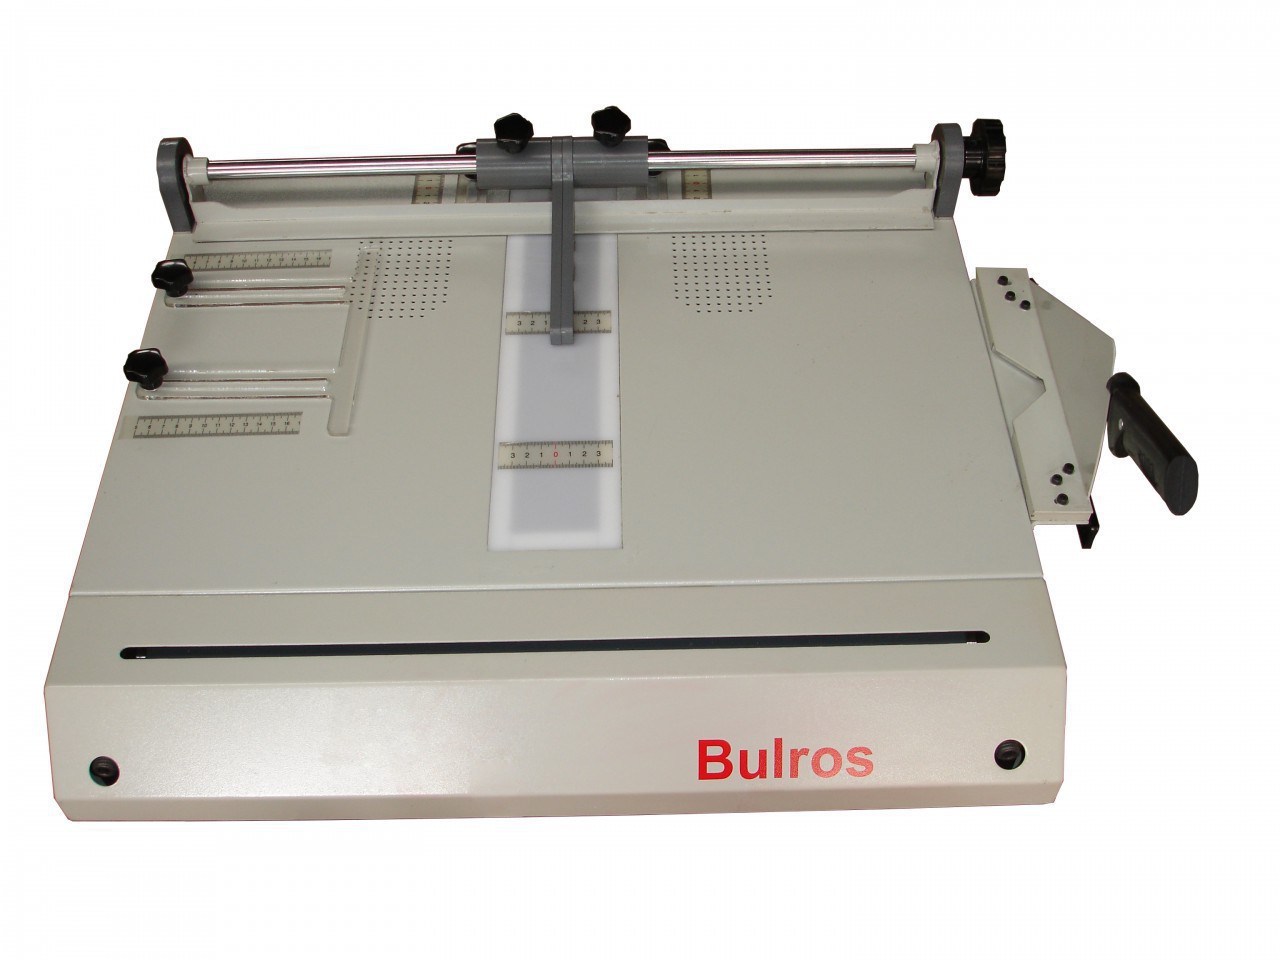 Крышкоделательный аппарат Bulros professional series 100K, А3 - 111205.1 руб.